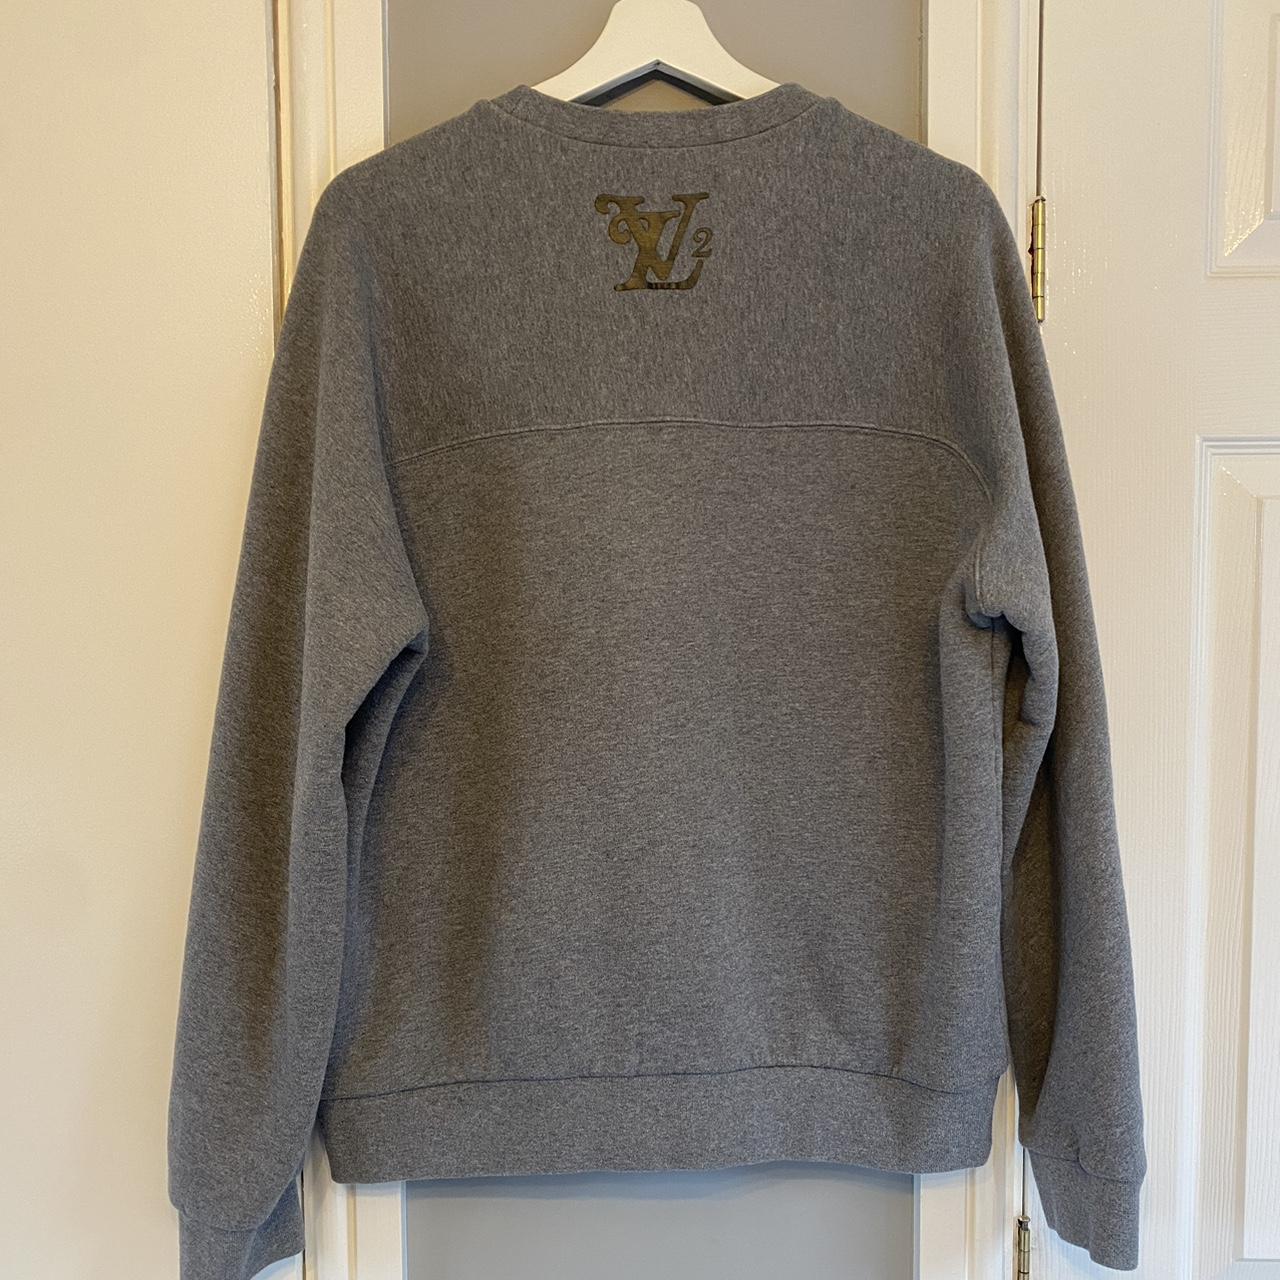 Louis Vuitton Squared LV Sweatshirt, Grey, Small - Depop